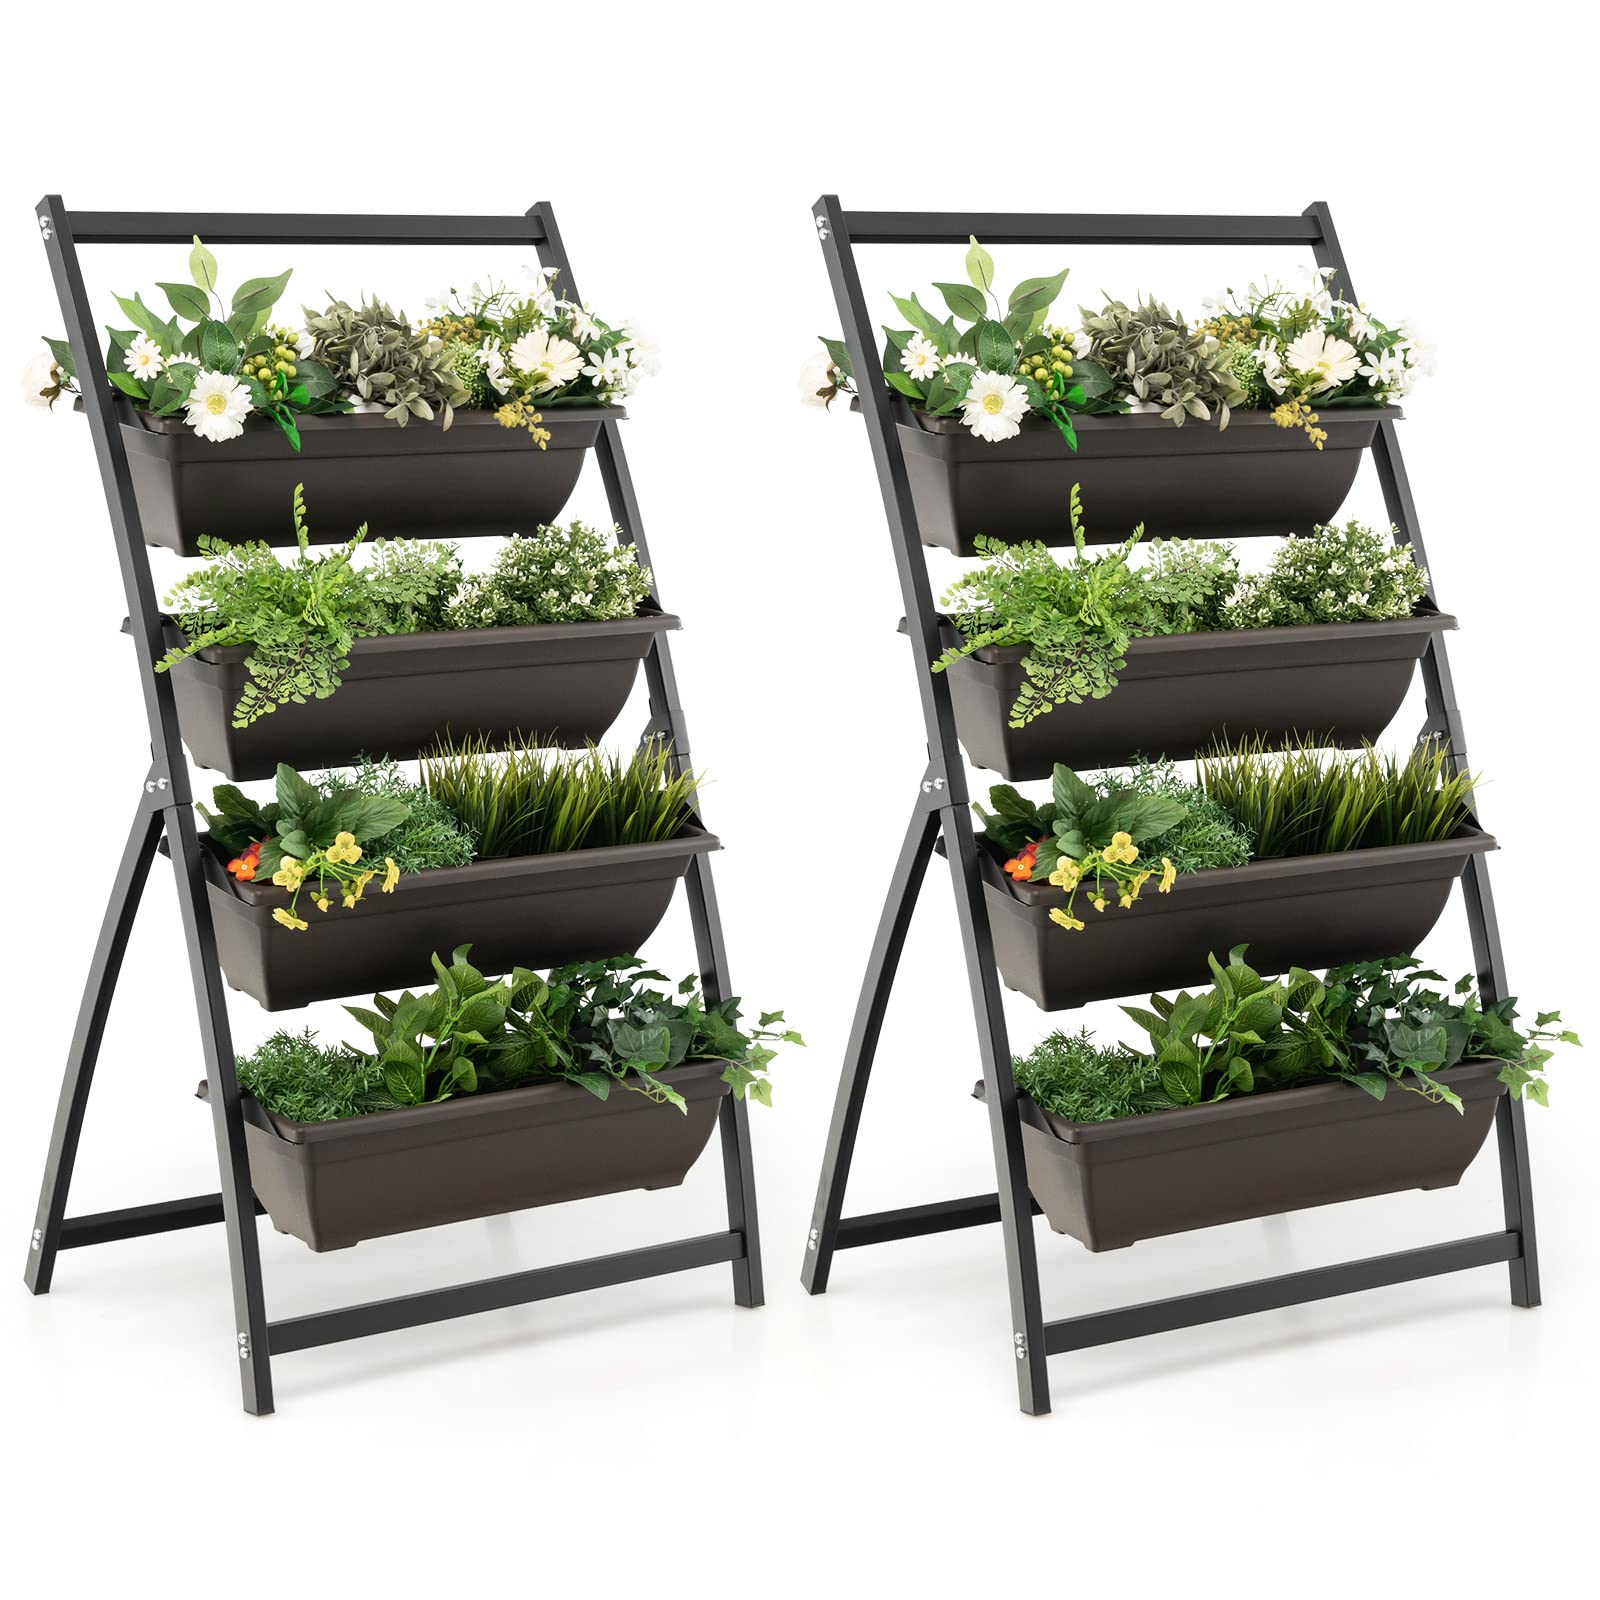 Giantex 2 Pcs 4.1FT Vertical Raised Garden Bed, 4-Tier Elevated Planter Box